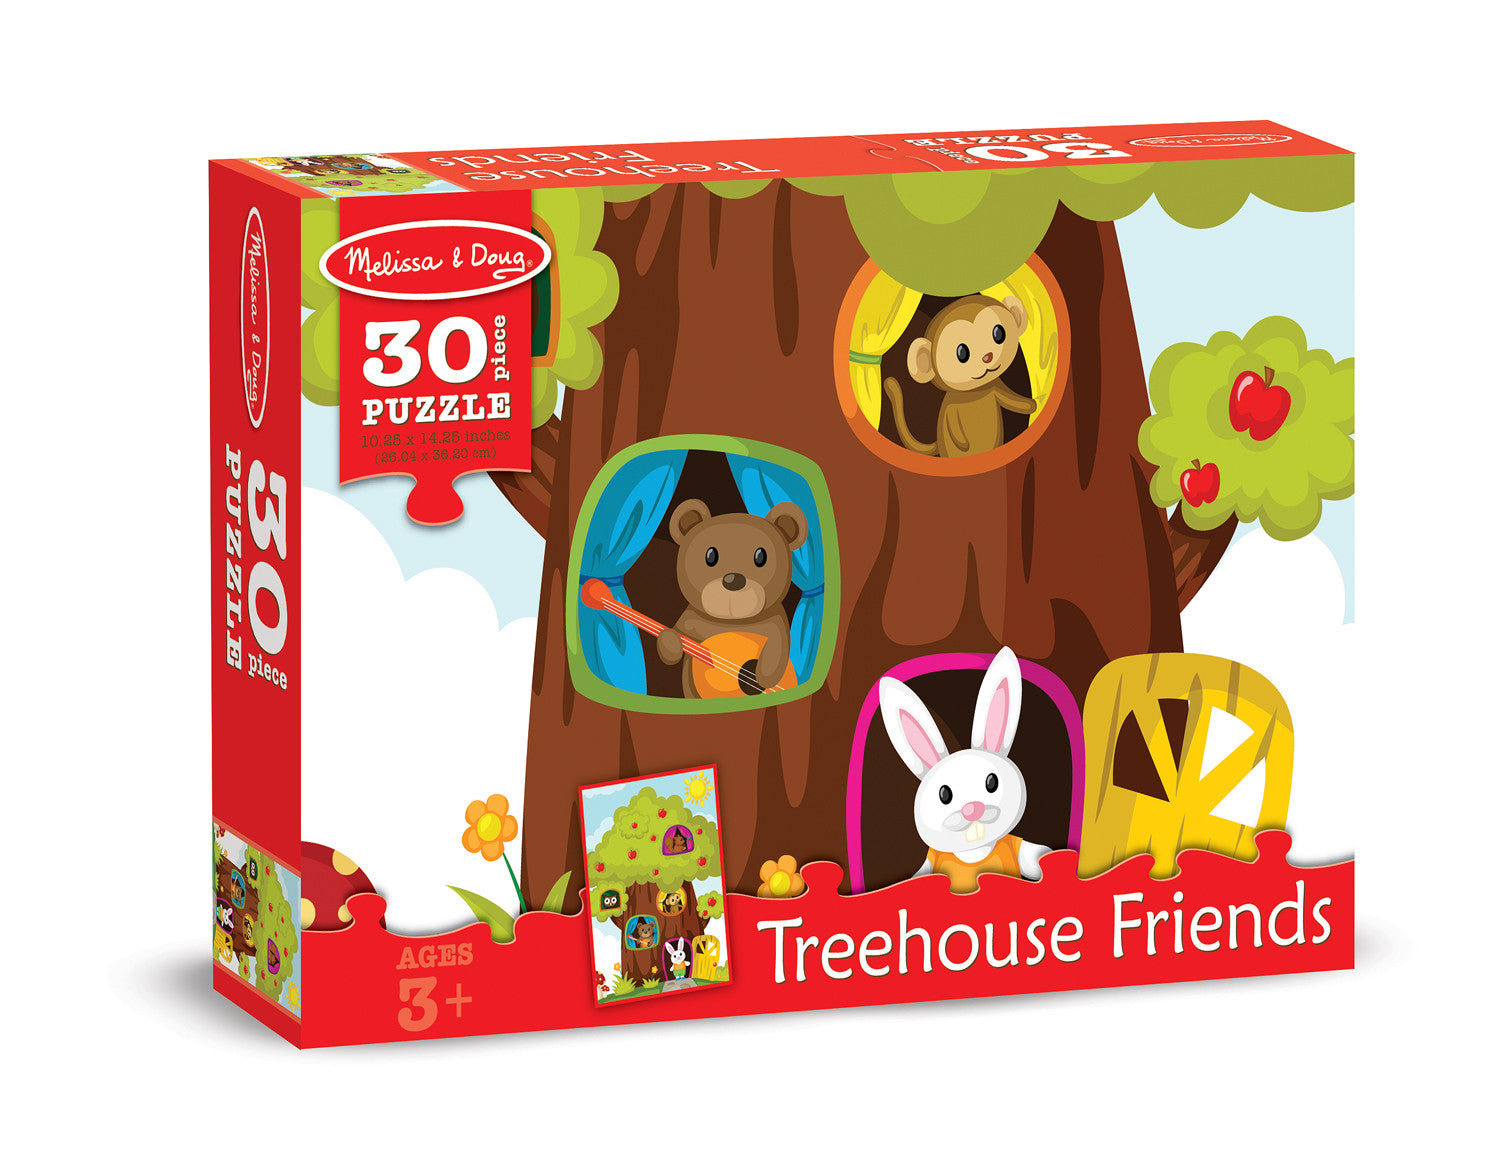 Melissa & Doug 0030 pc Treehouse Friends Cardboard Jigsaw 8922